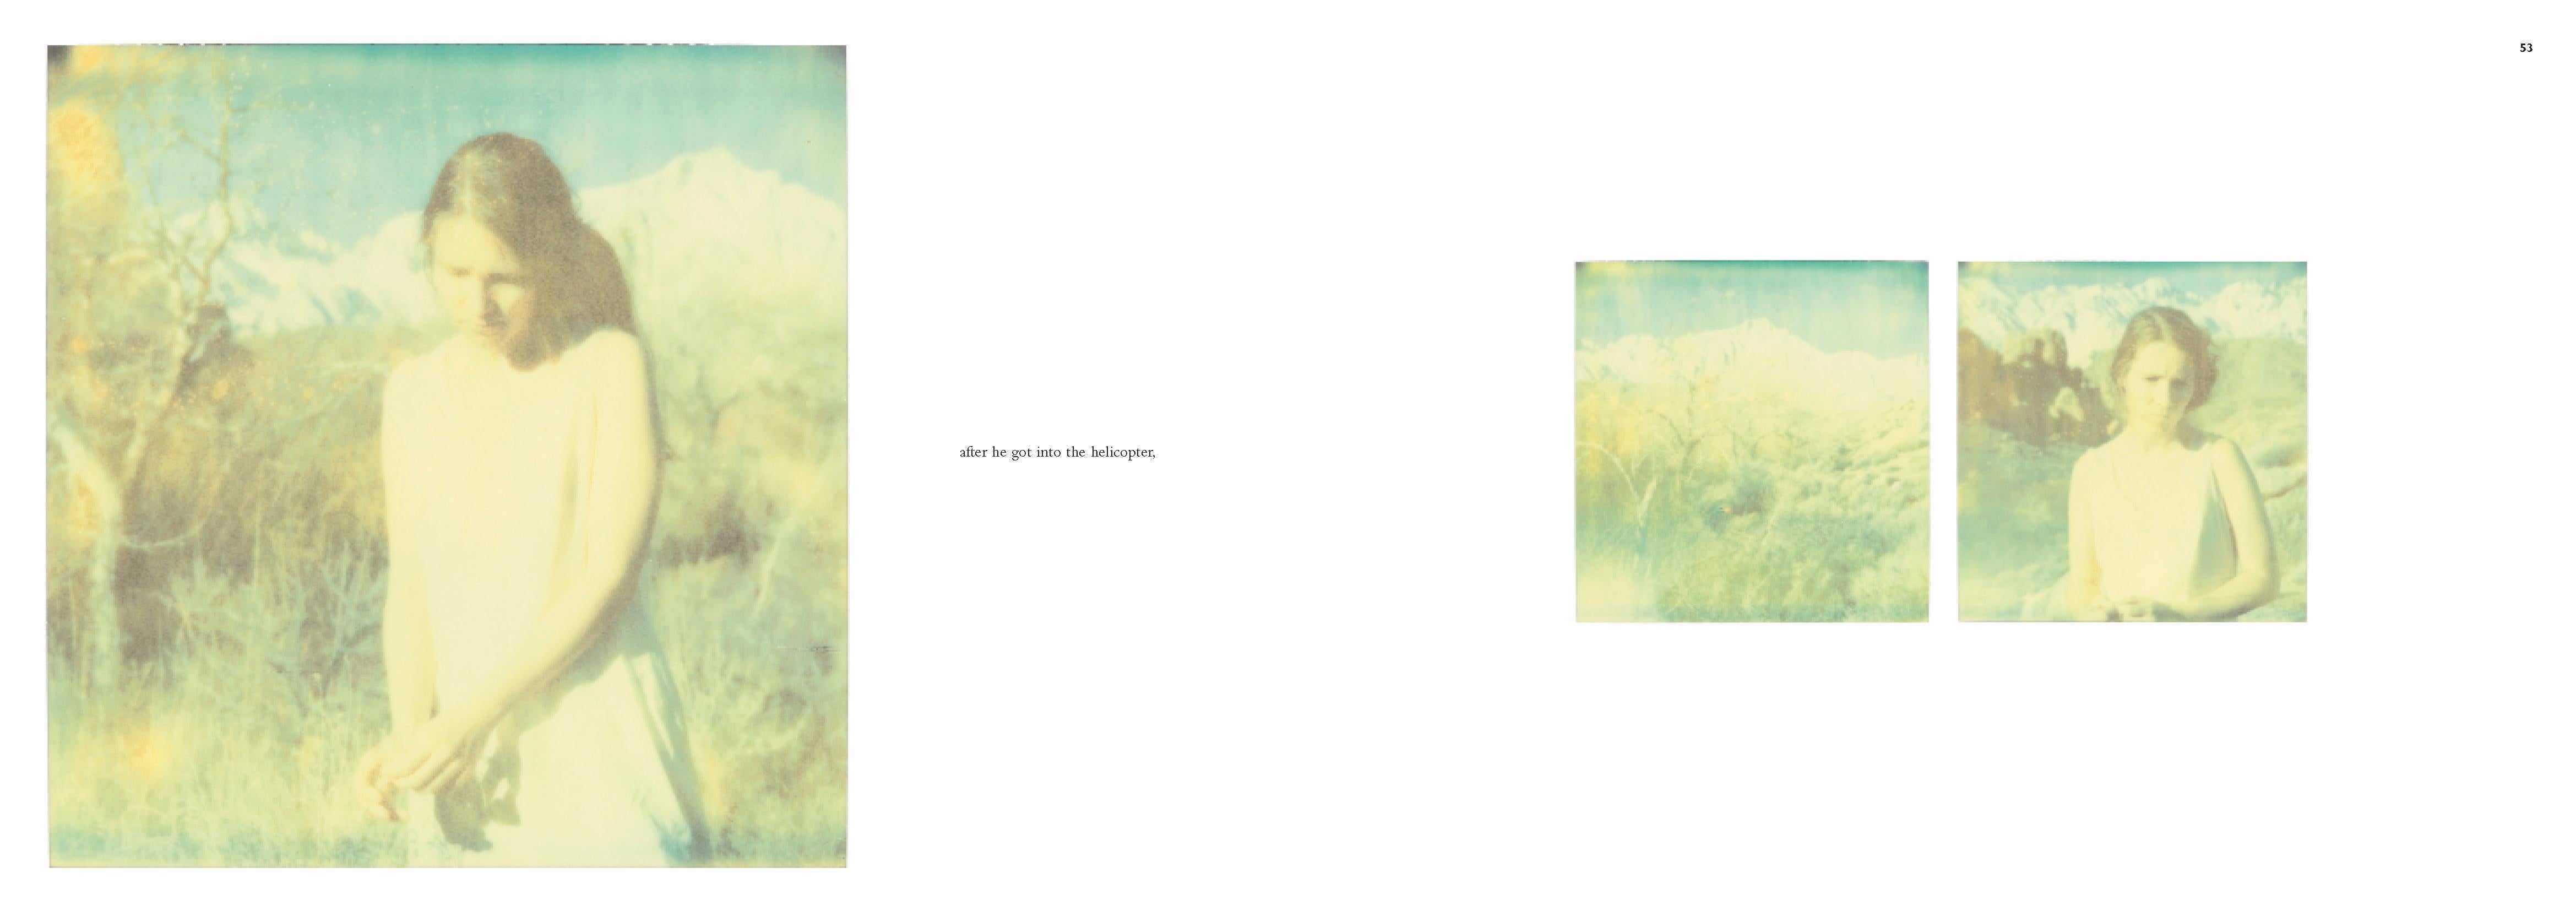 Wind Swep (Wastelands) - diptych, Contemporary, Figurative, Polaroid, analog 3